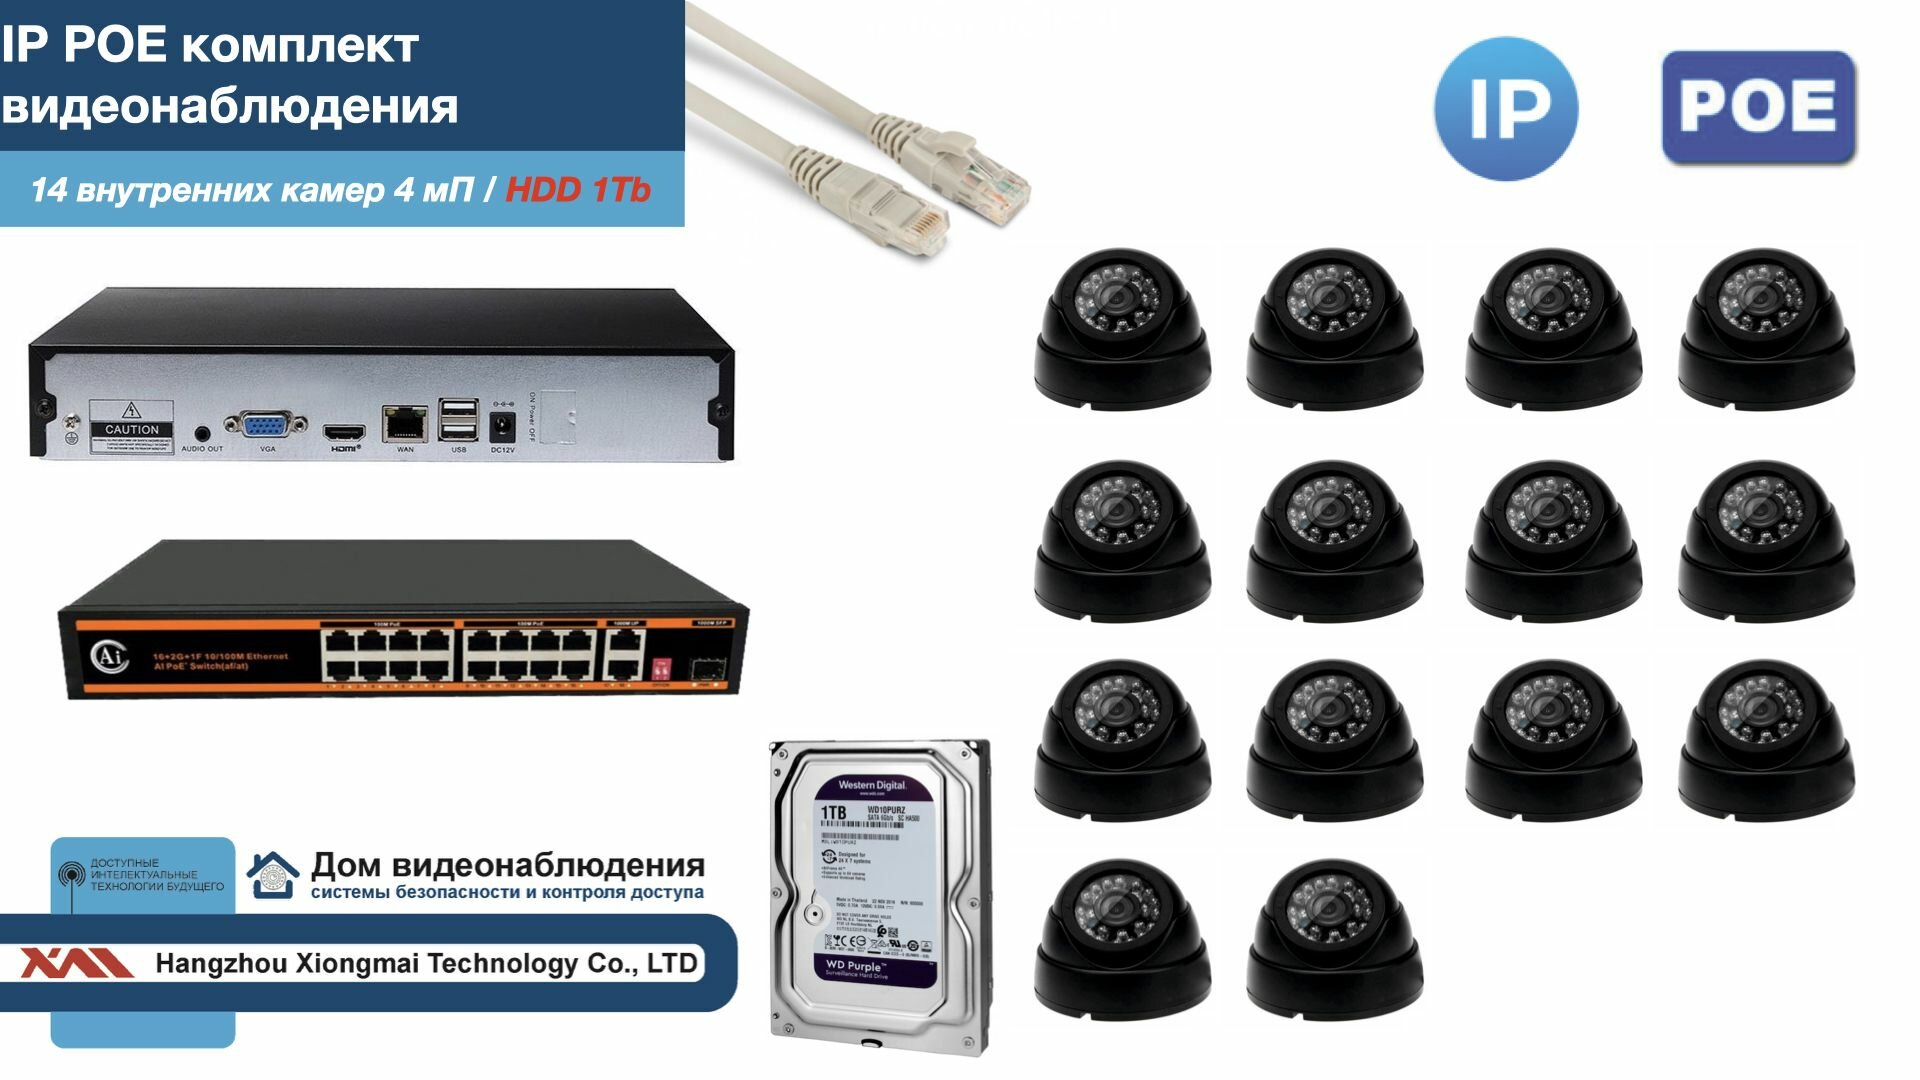 Полный IP POE комплект видеонаблюдения на 14 камер (KIT14IPPOE300B4MP-HDD1Tb)